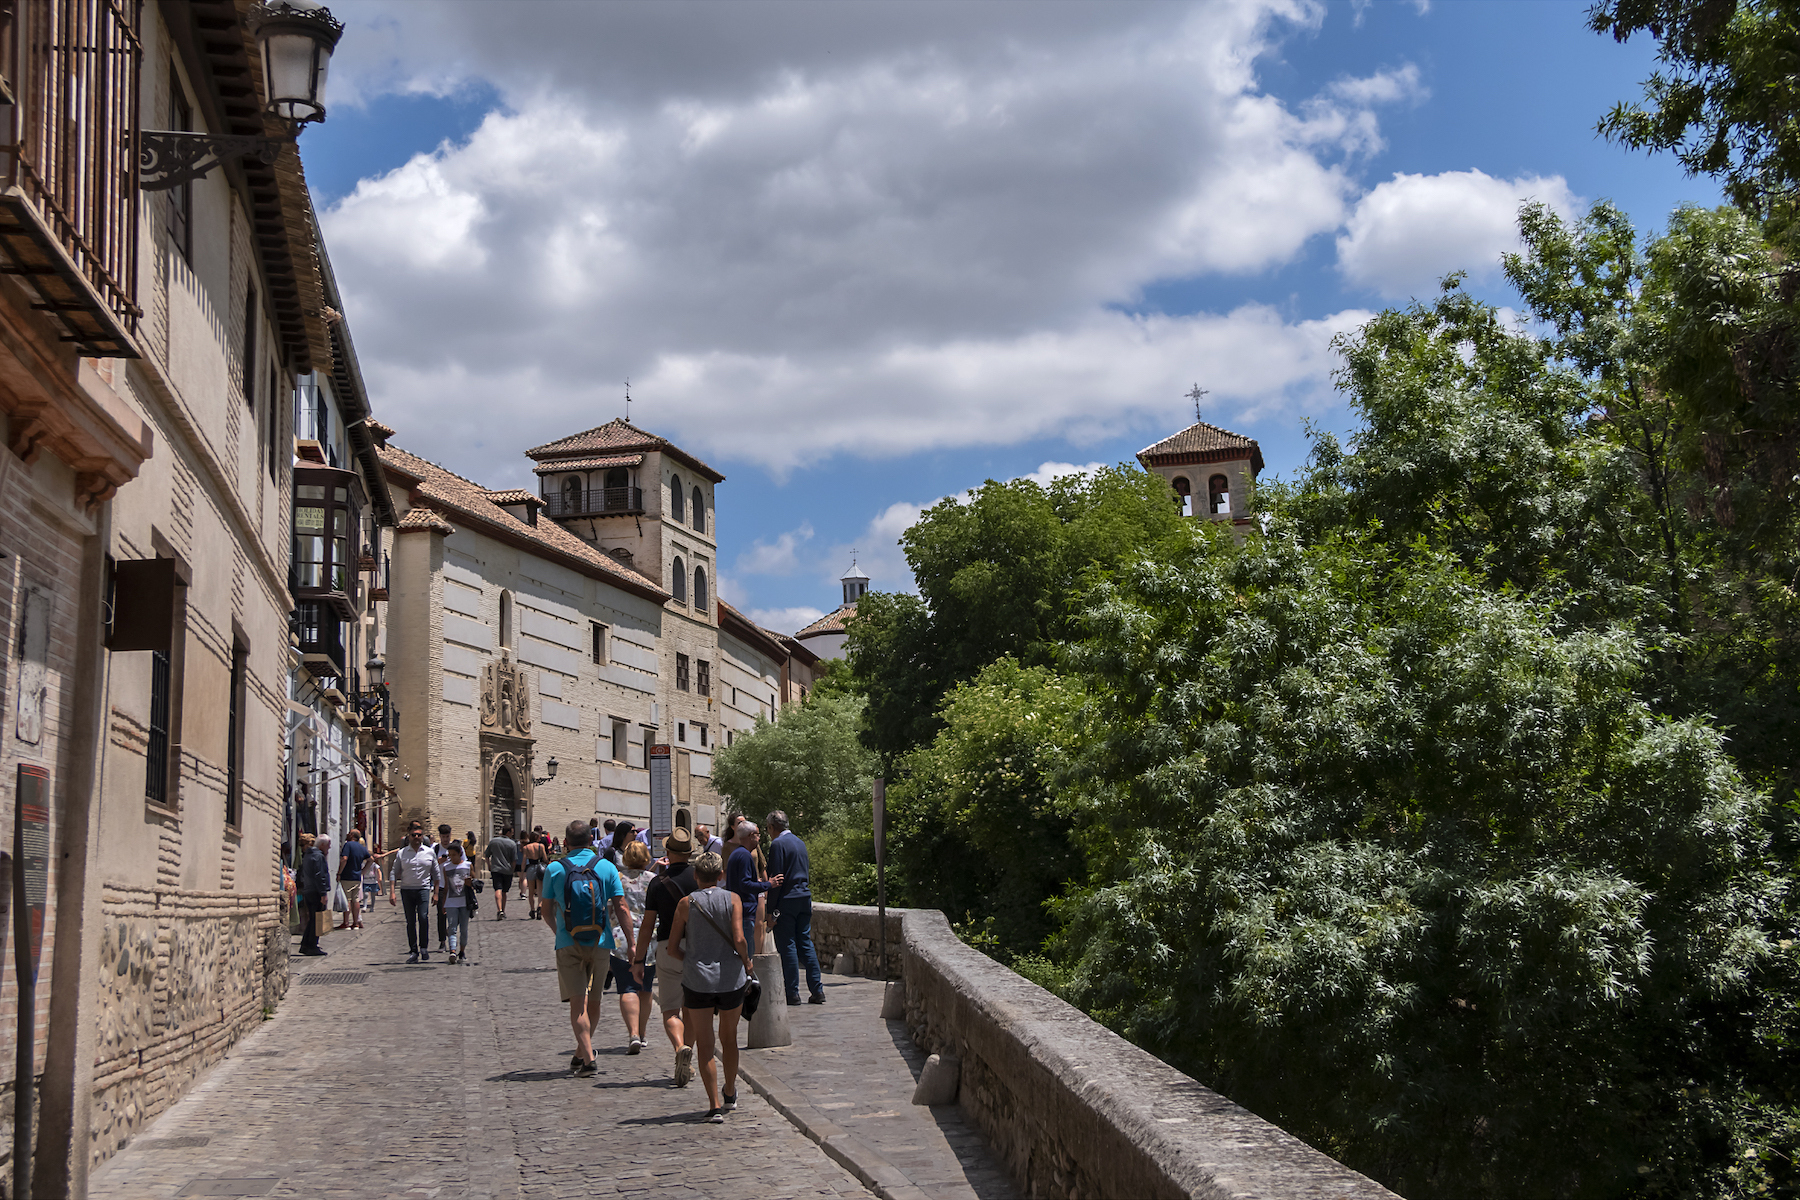 Cómo pasar un fin de semana perfecto en hermosa Granada, España - 13